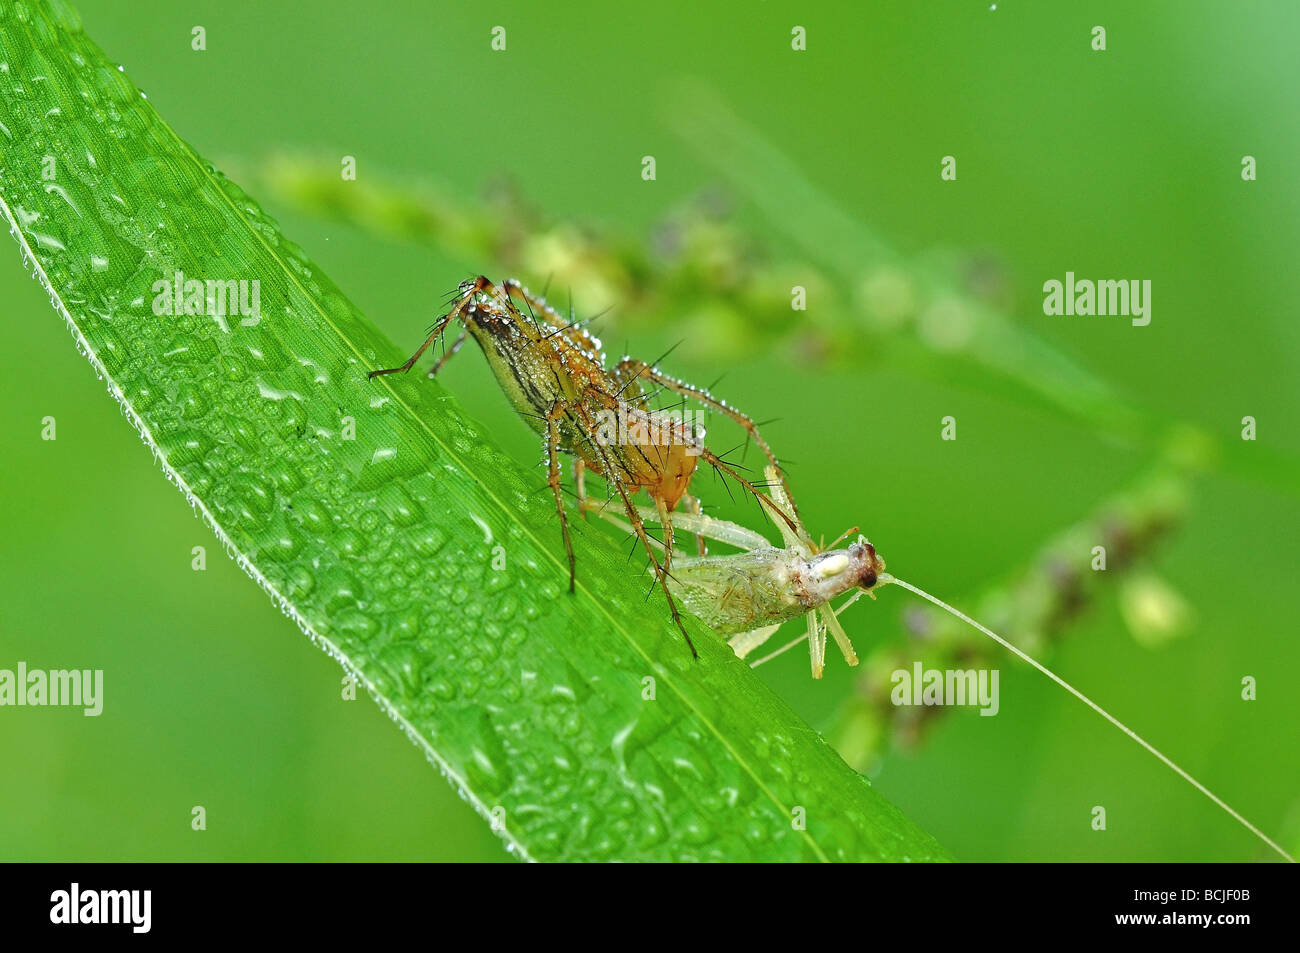 lynx spider eating a grasshopper Stock Photo